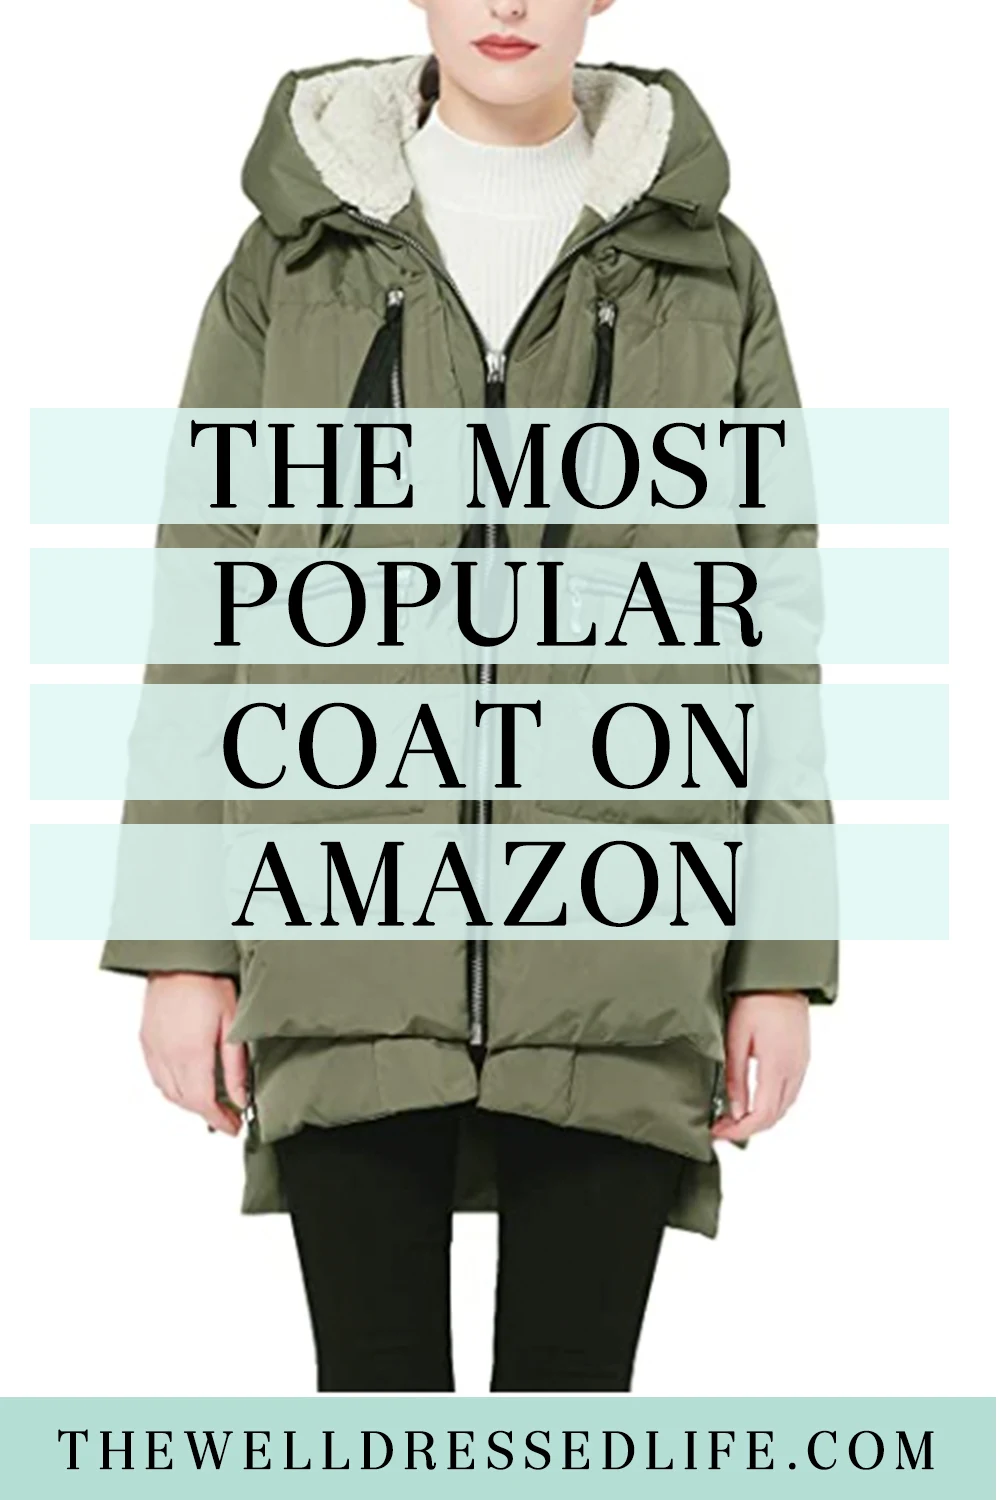 The Most Popular Coat on Amazon